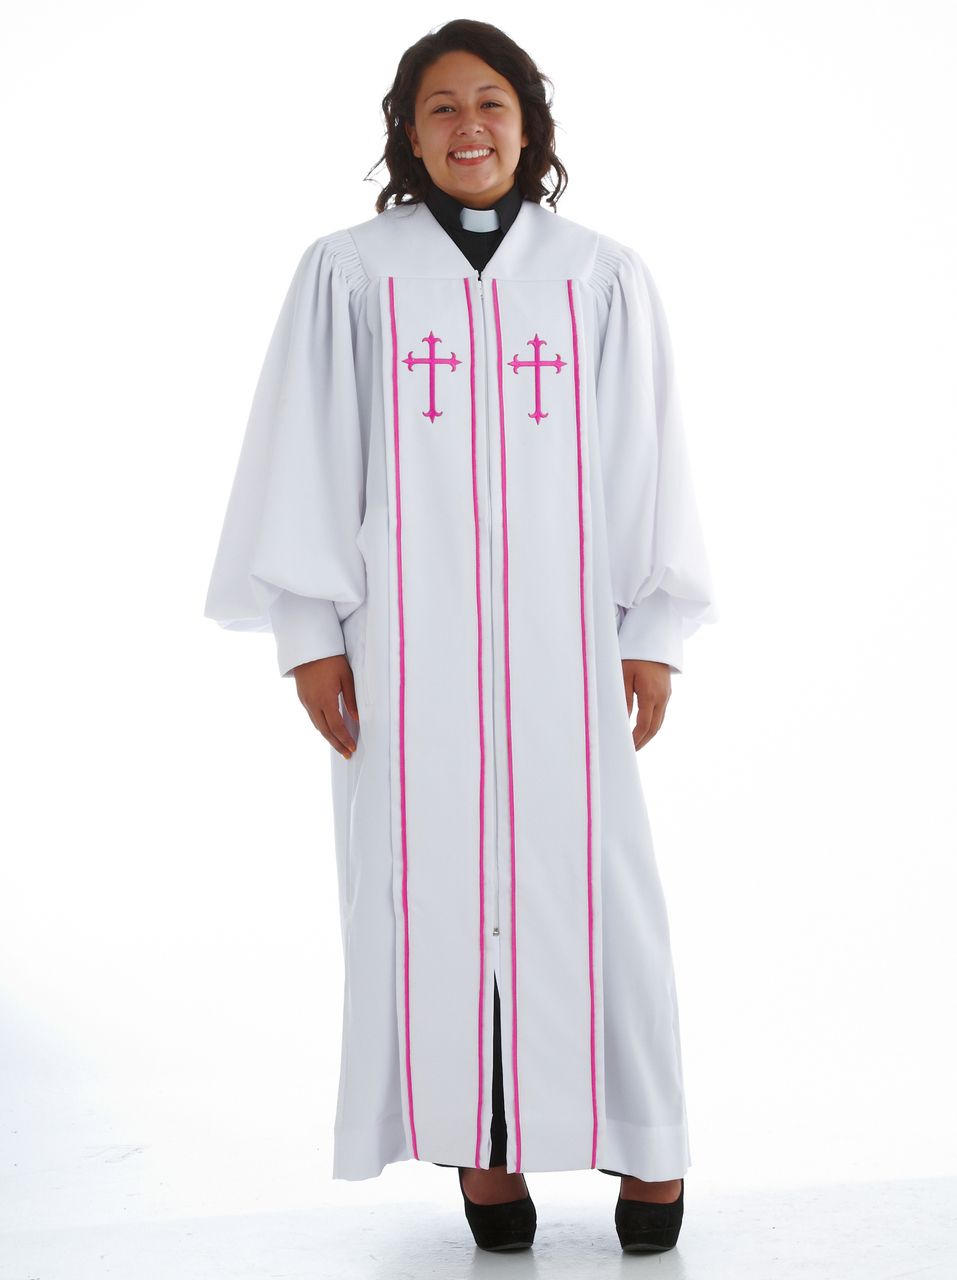 927 P. Men's & Women's Clergy Robe - White/Fuchsia